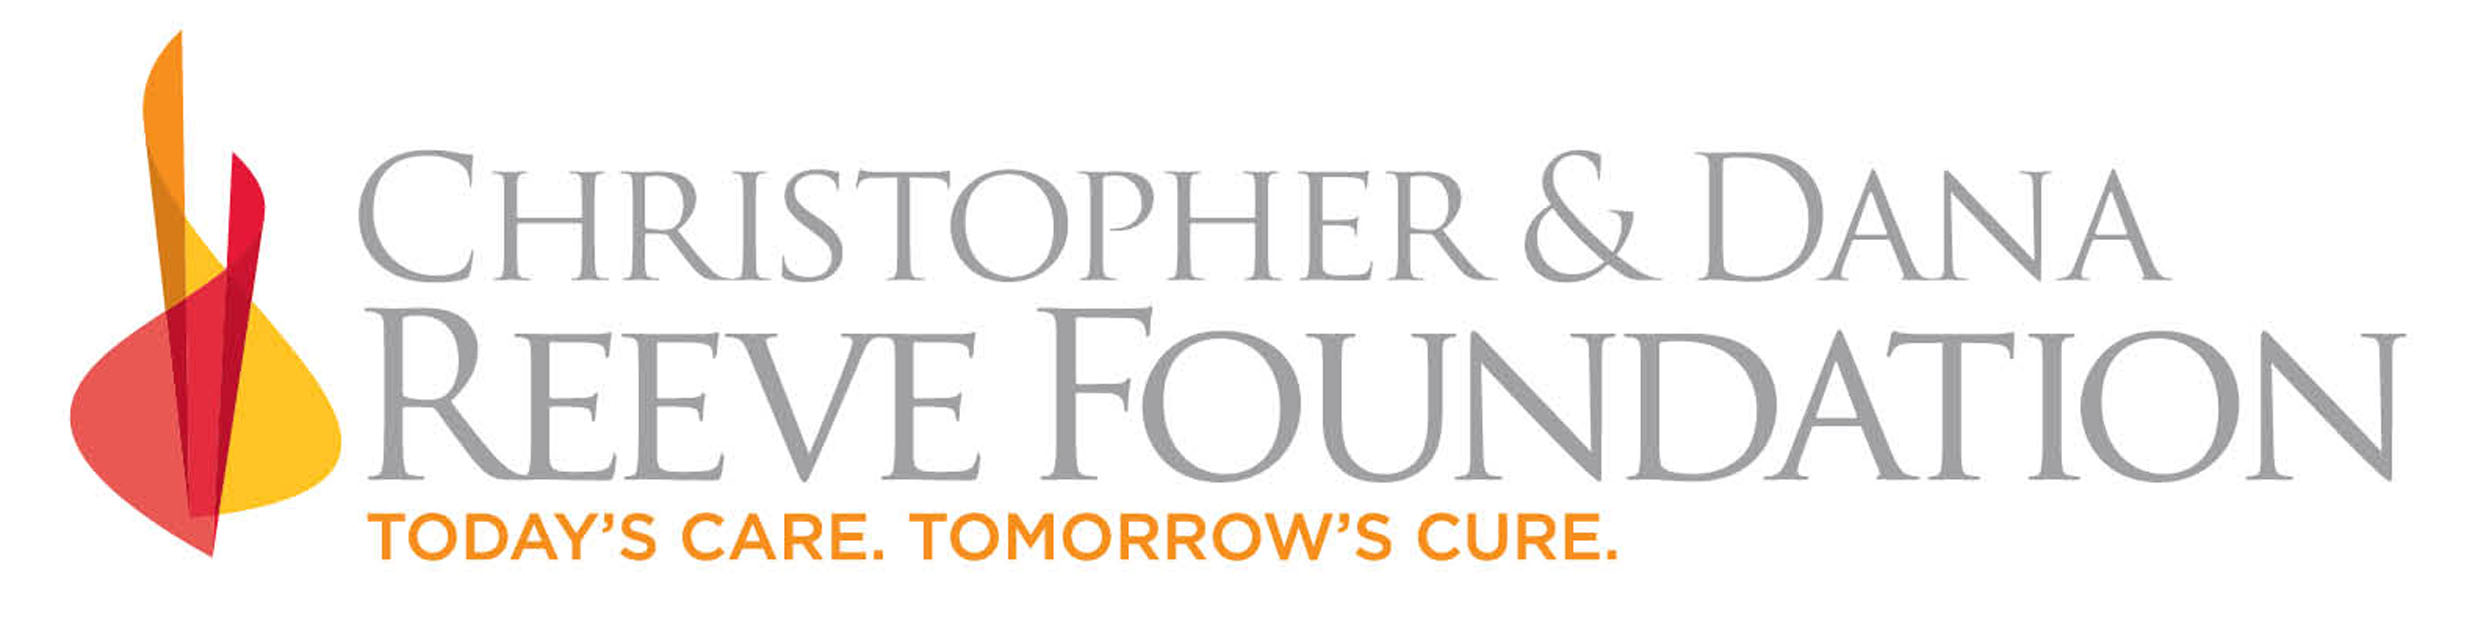 Reeve_Foundation_logo